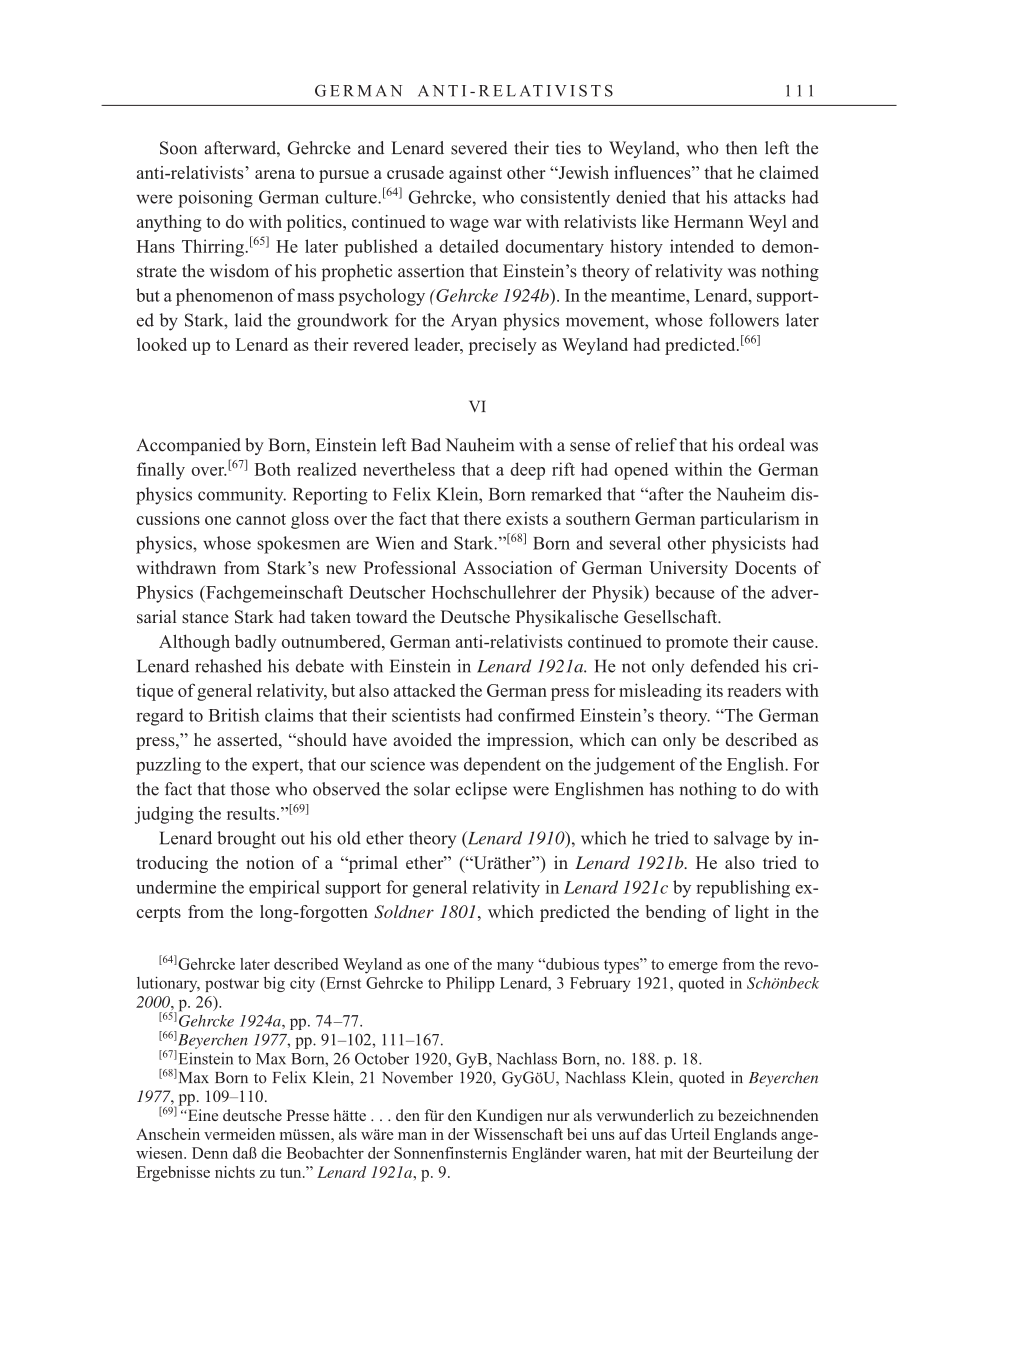 Volume 7: The Berlin Years: Writings, 1918-1921 page 111